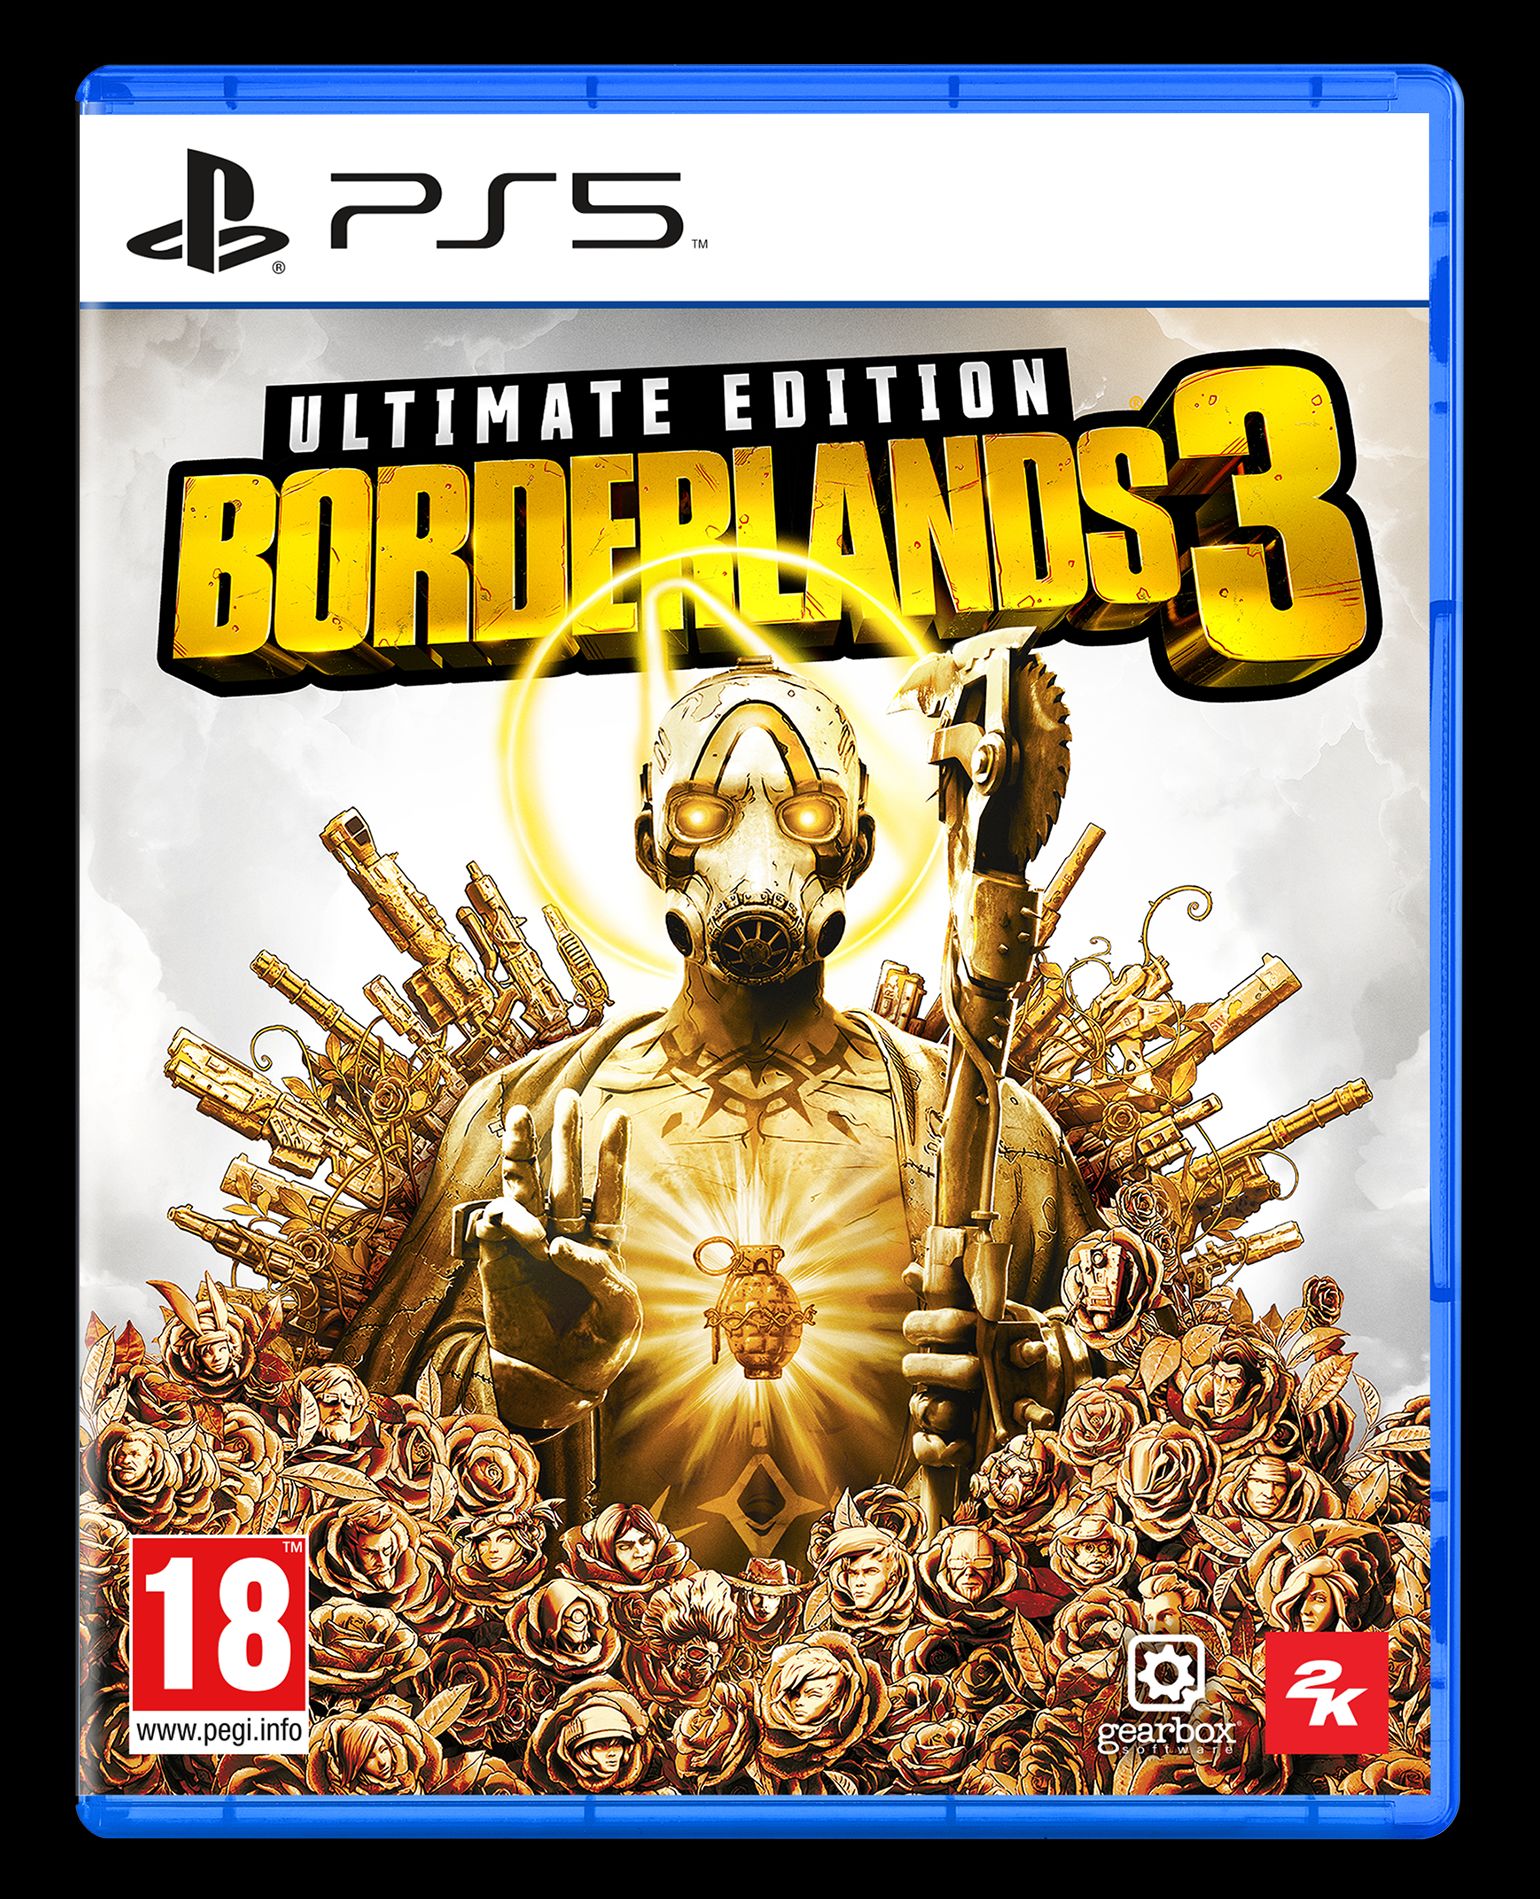 Borderlands 3 Next Level Edition